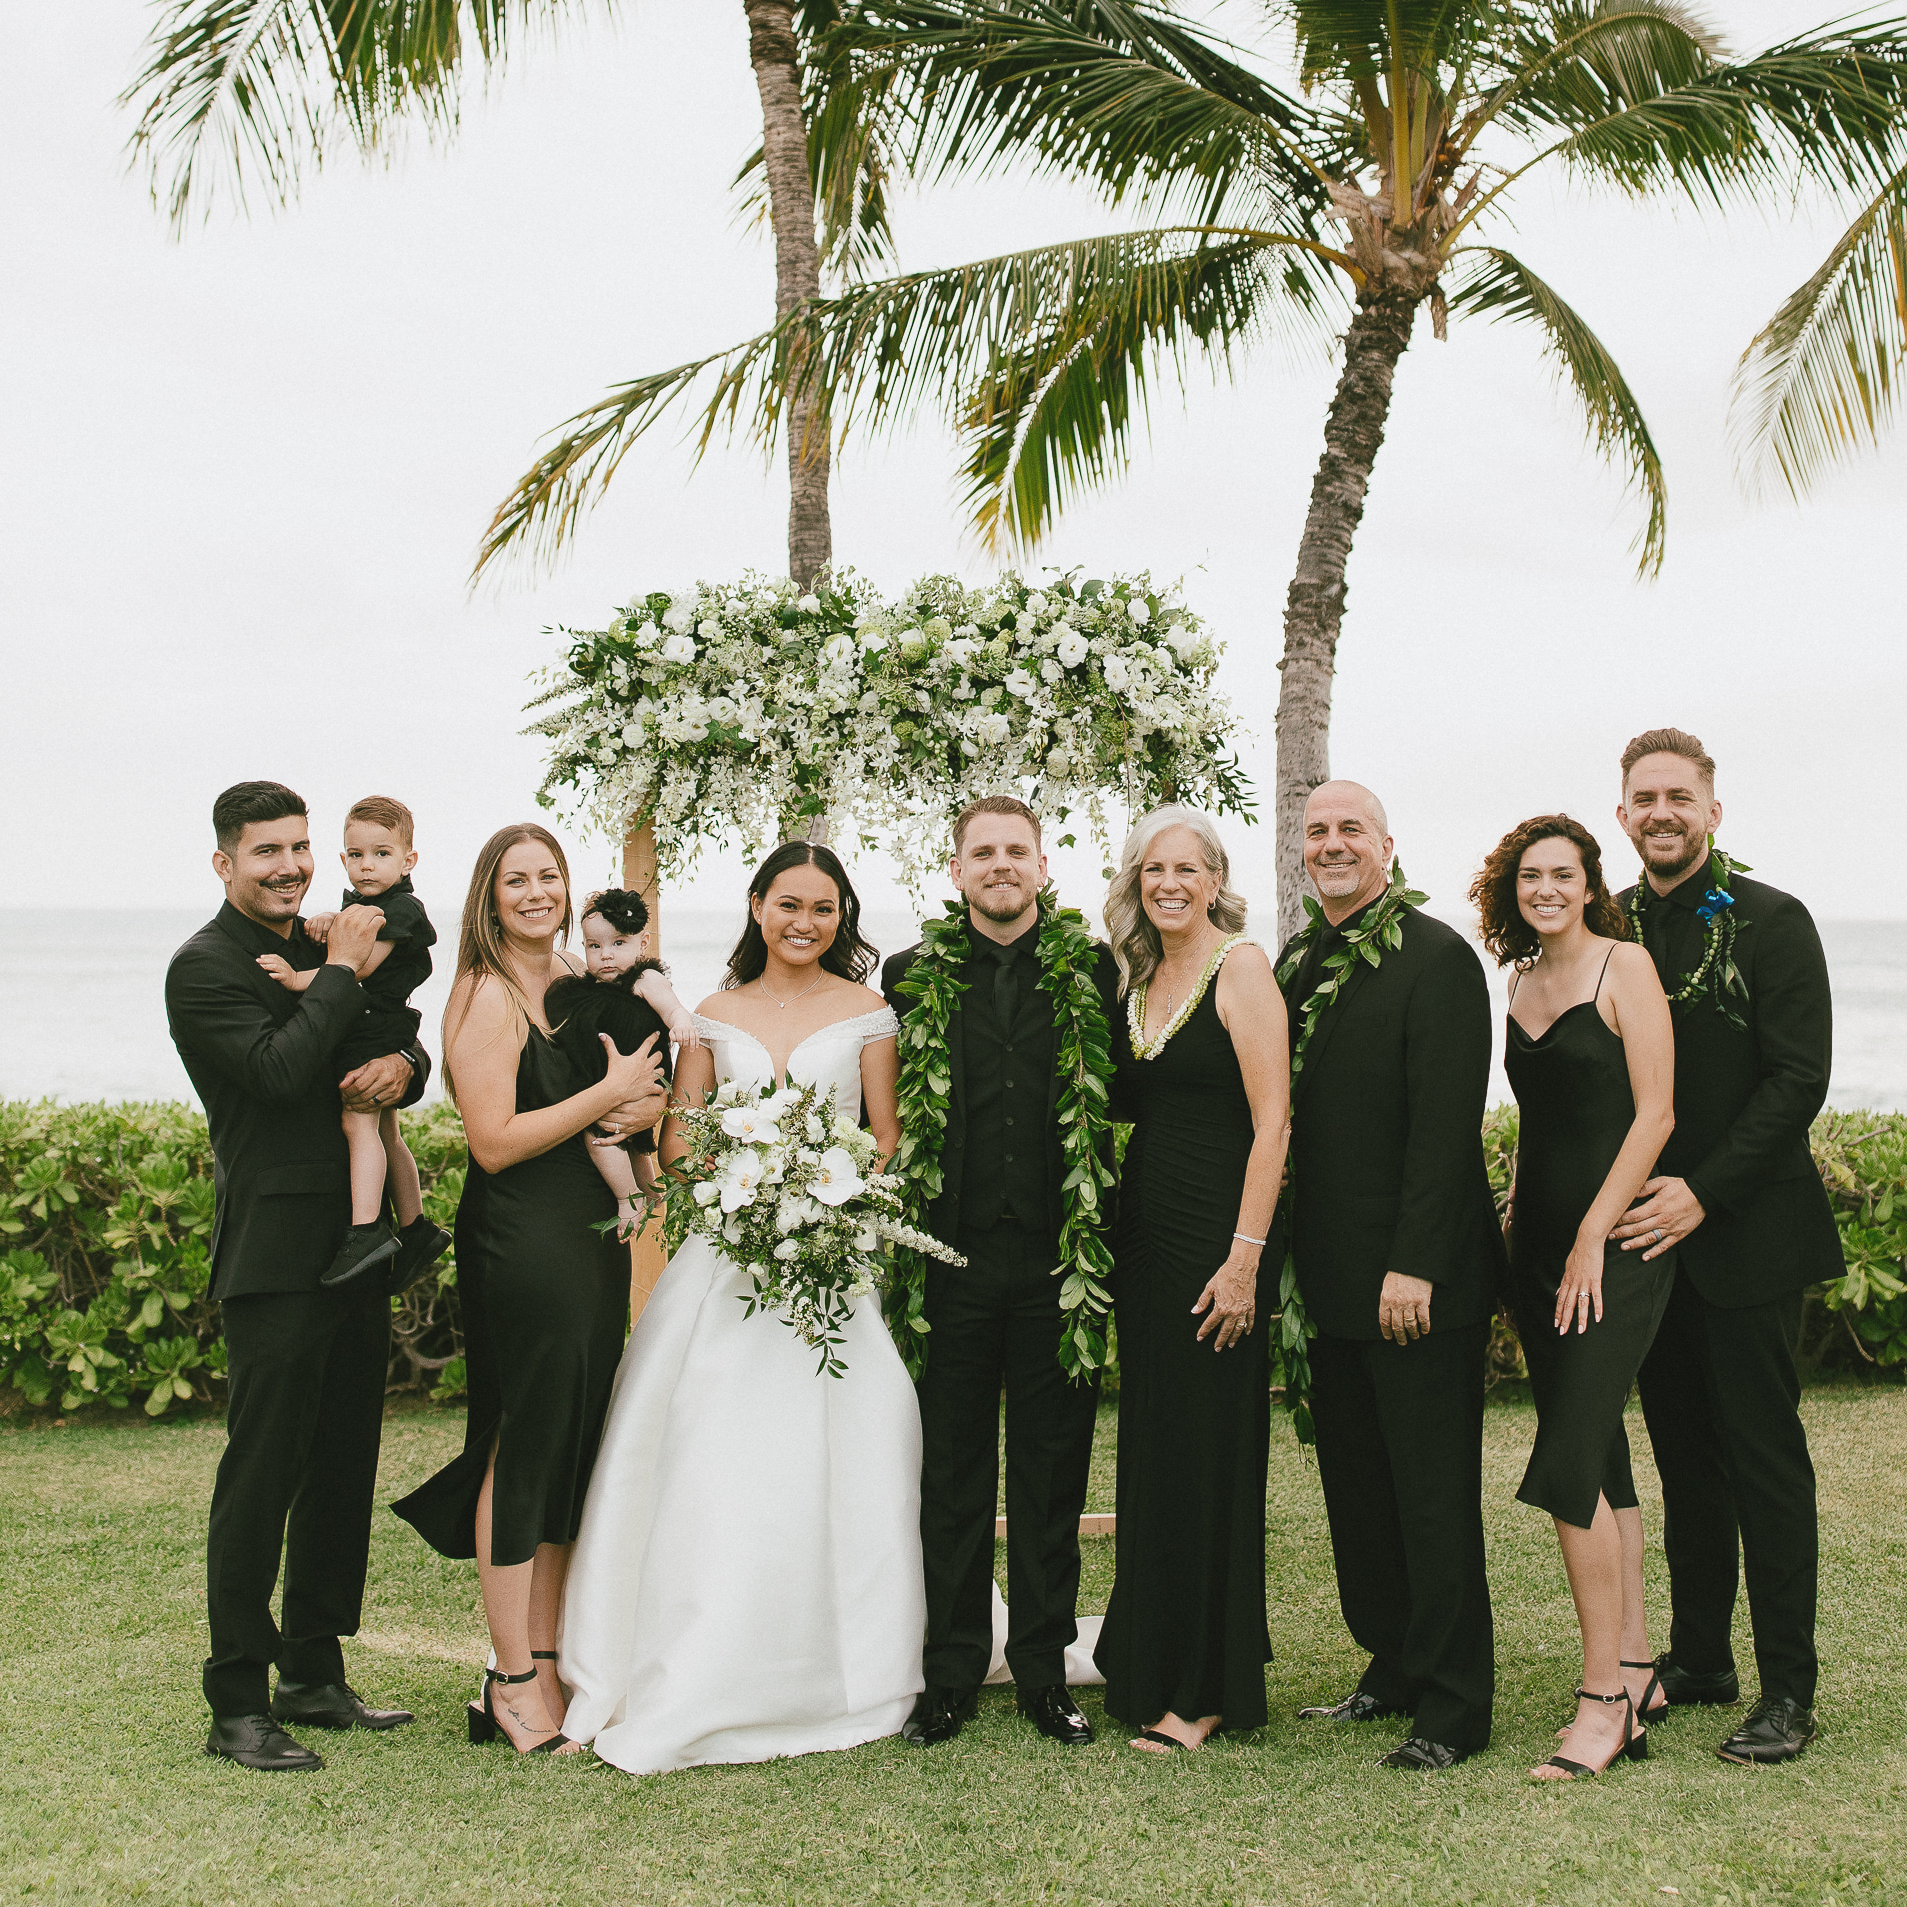 wedding photo of 10 adults and two babies in Hawaiian setting